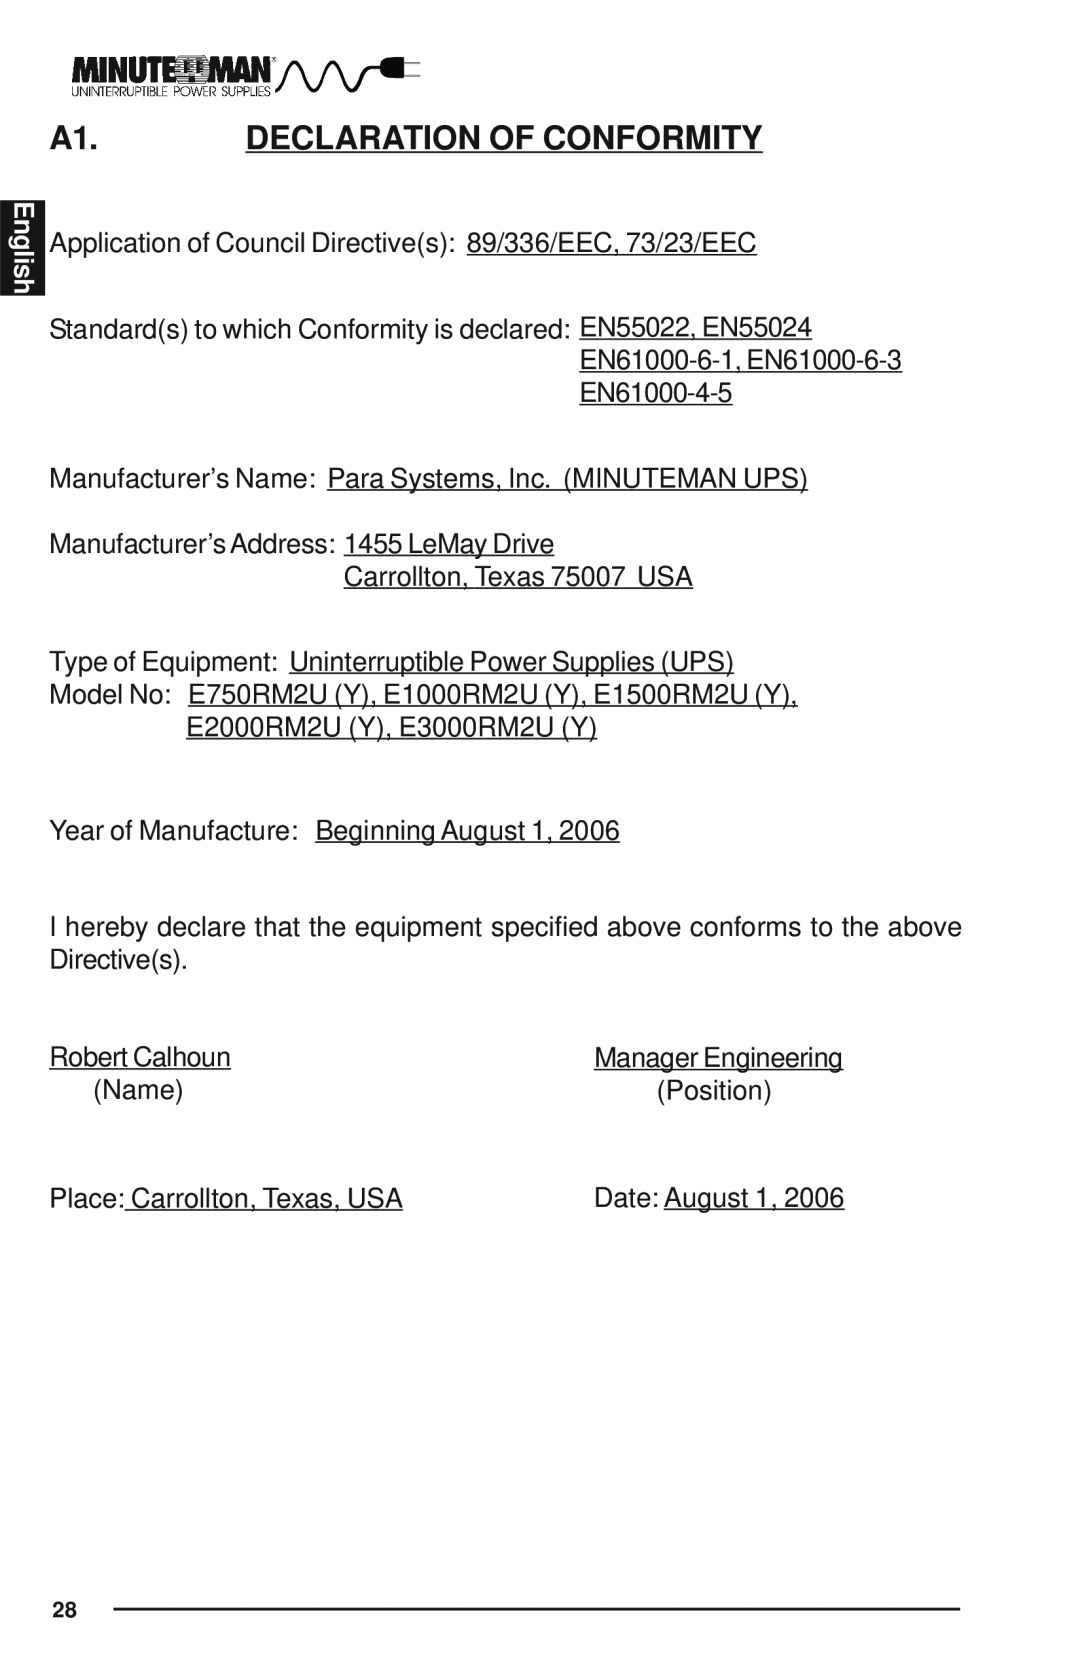 Minuteman UPS Enterprise Plus Series user manual A1. DECLARATION OF CONFORMITY, English 